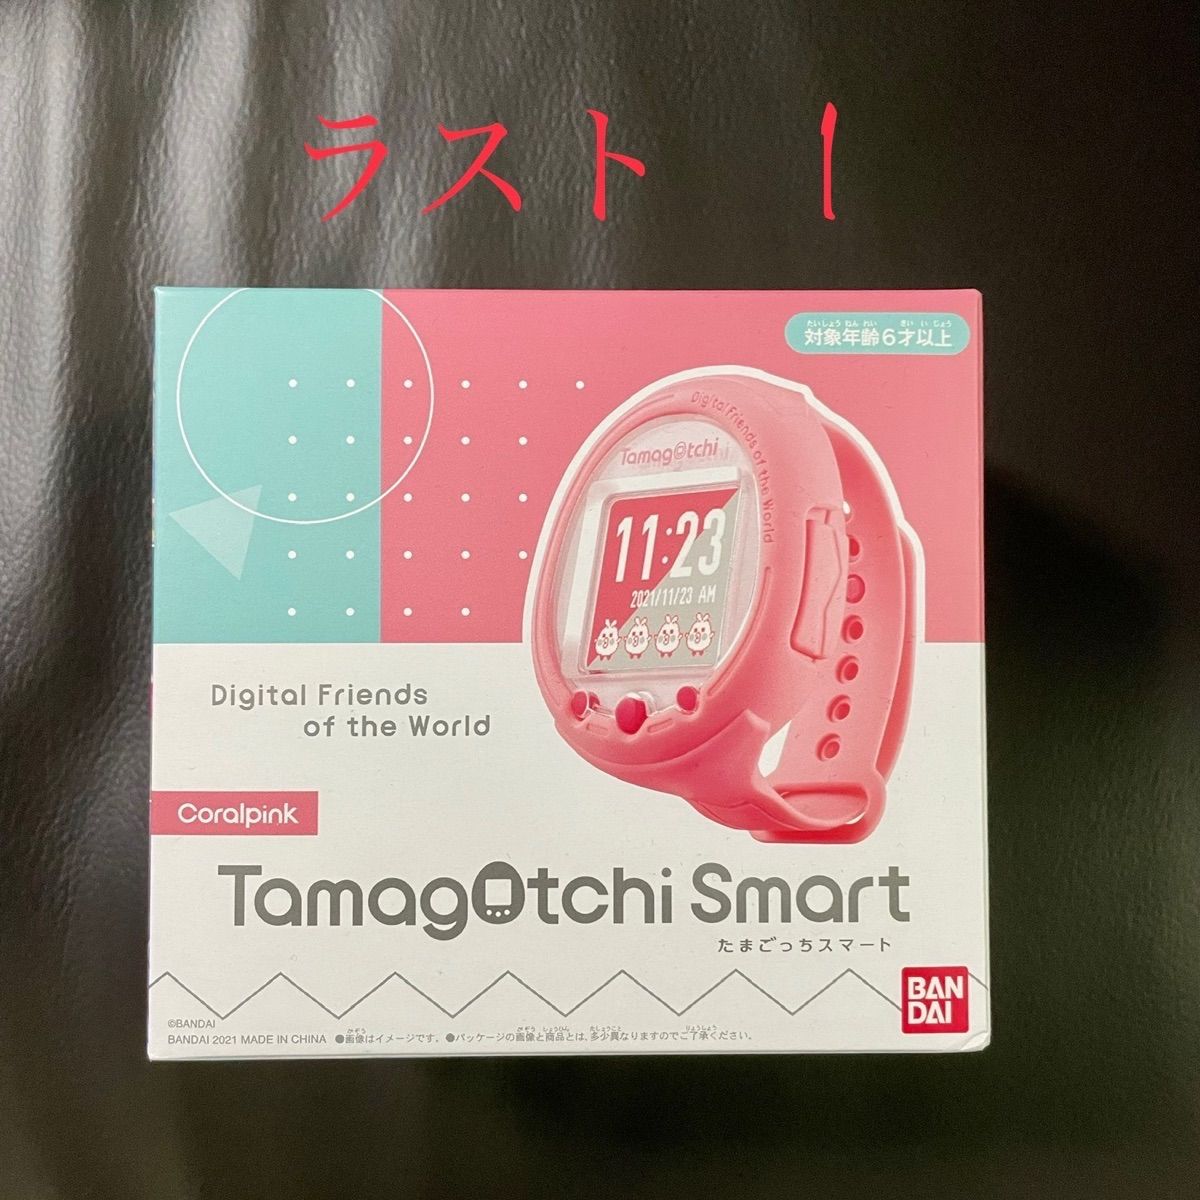 Tamagotchi Smart Coralpinkたまごっちスマート - その他